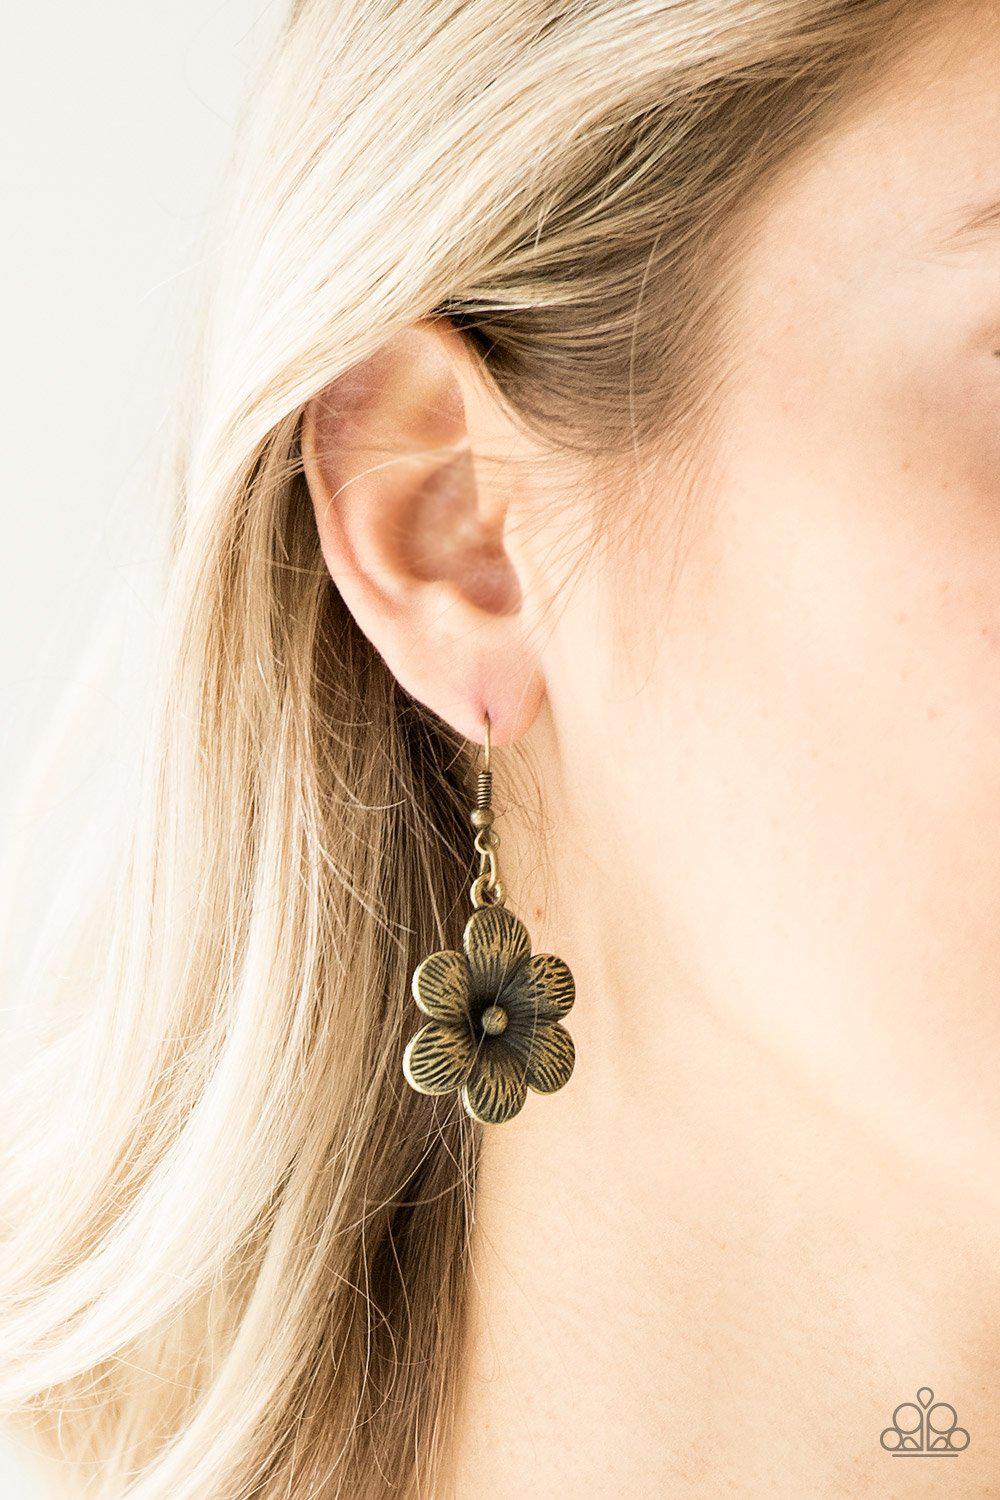 Secret Garden Brass Flower Necklace - Paparazzi Accessories-free matching earrings -CarasShop.com - $5 Jewelry by Cara Jewels